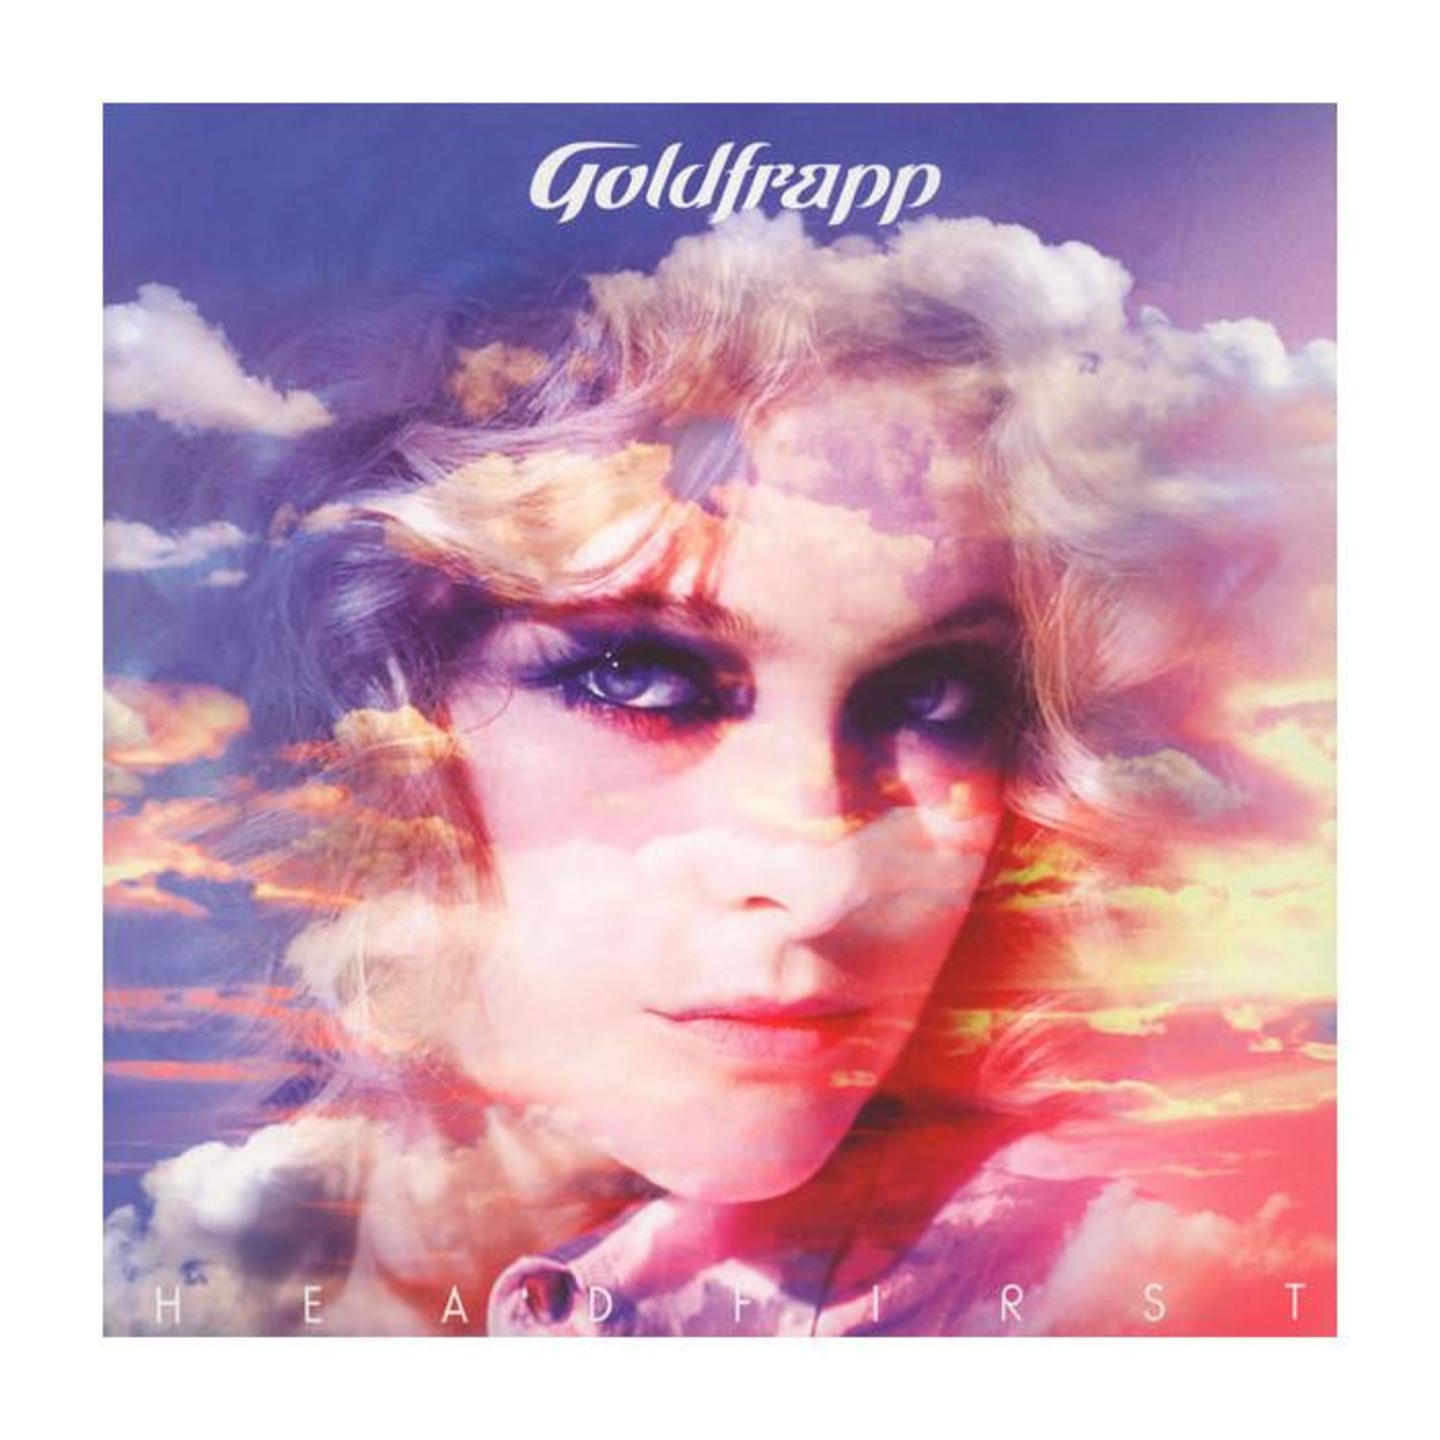 GOLDFRAPP - Head First LP